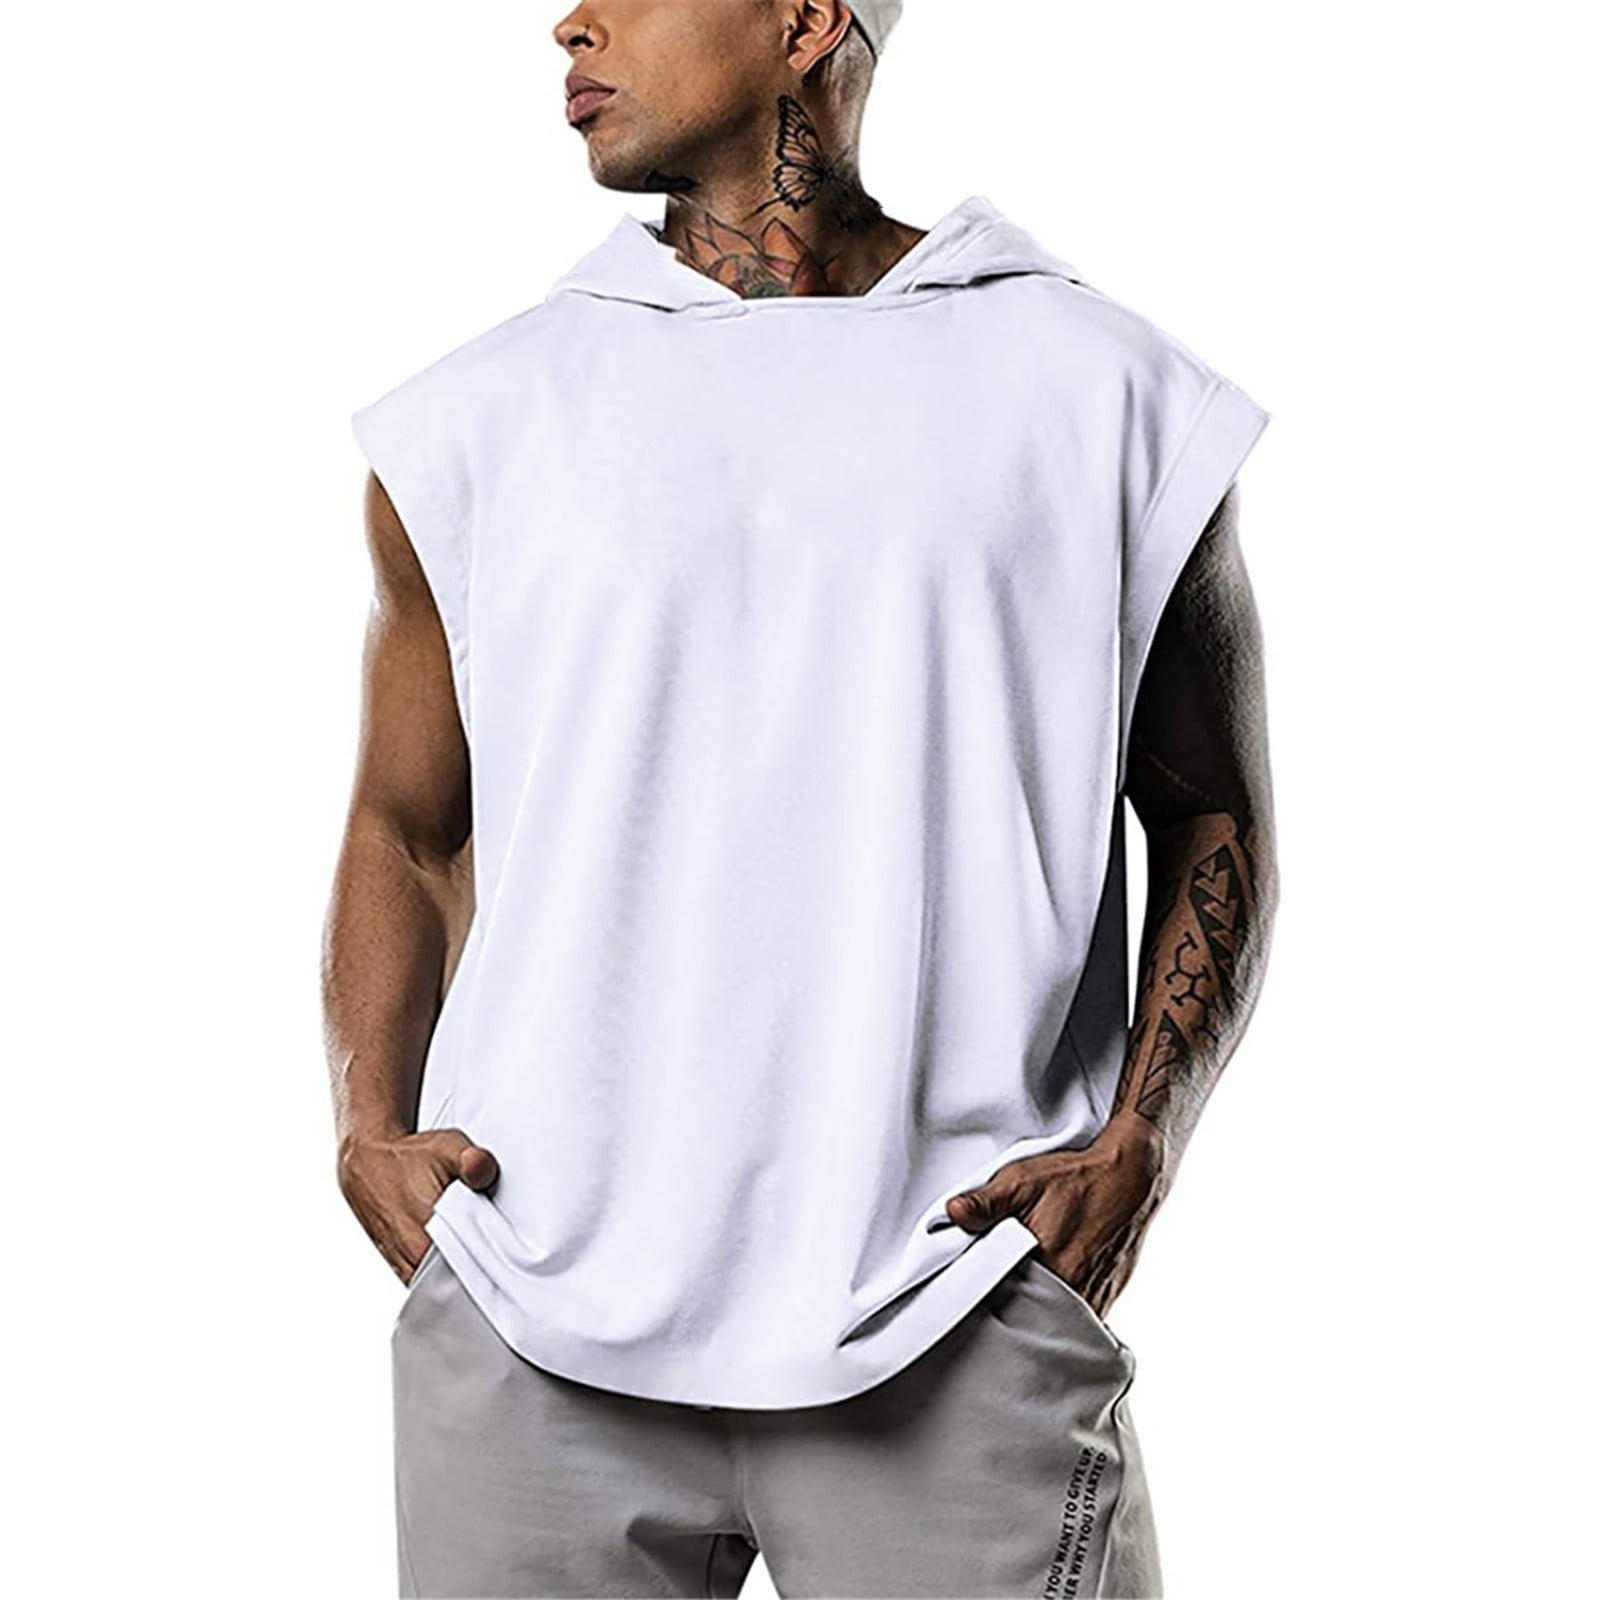 TOWED22 Sleeveless Shirts for Men,Men's Drop Shoulder Workout Gym